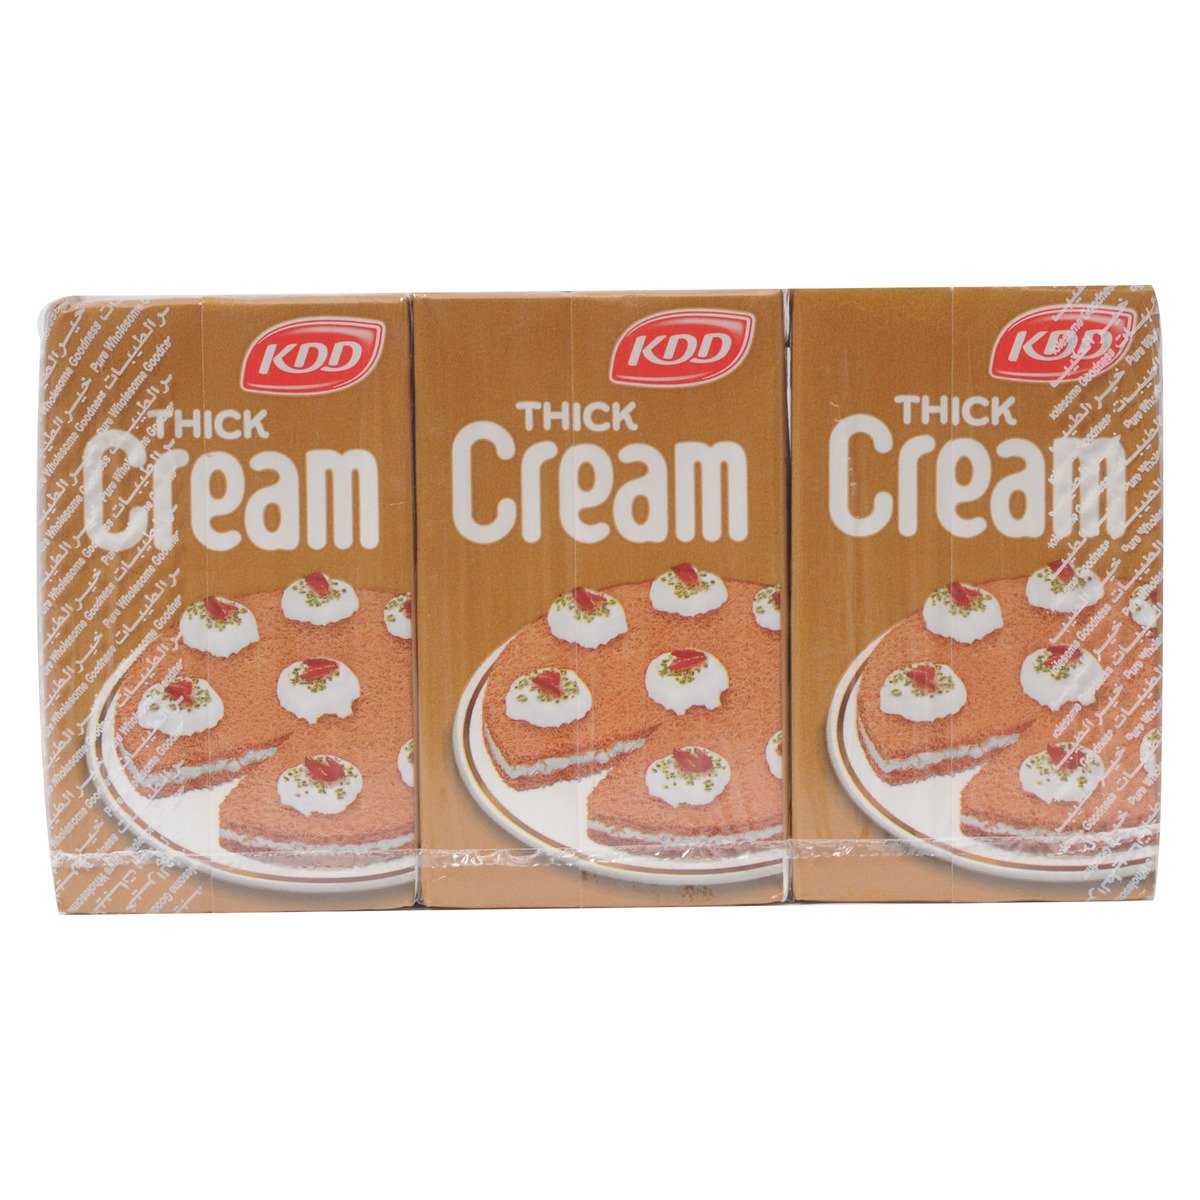 KDD Thick Cream 3 x 250 ml